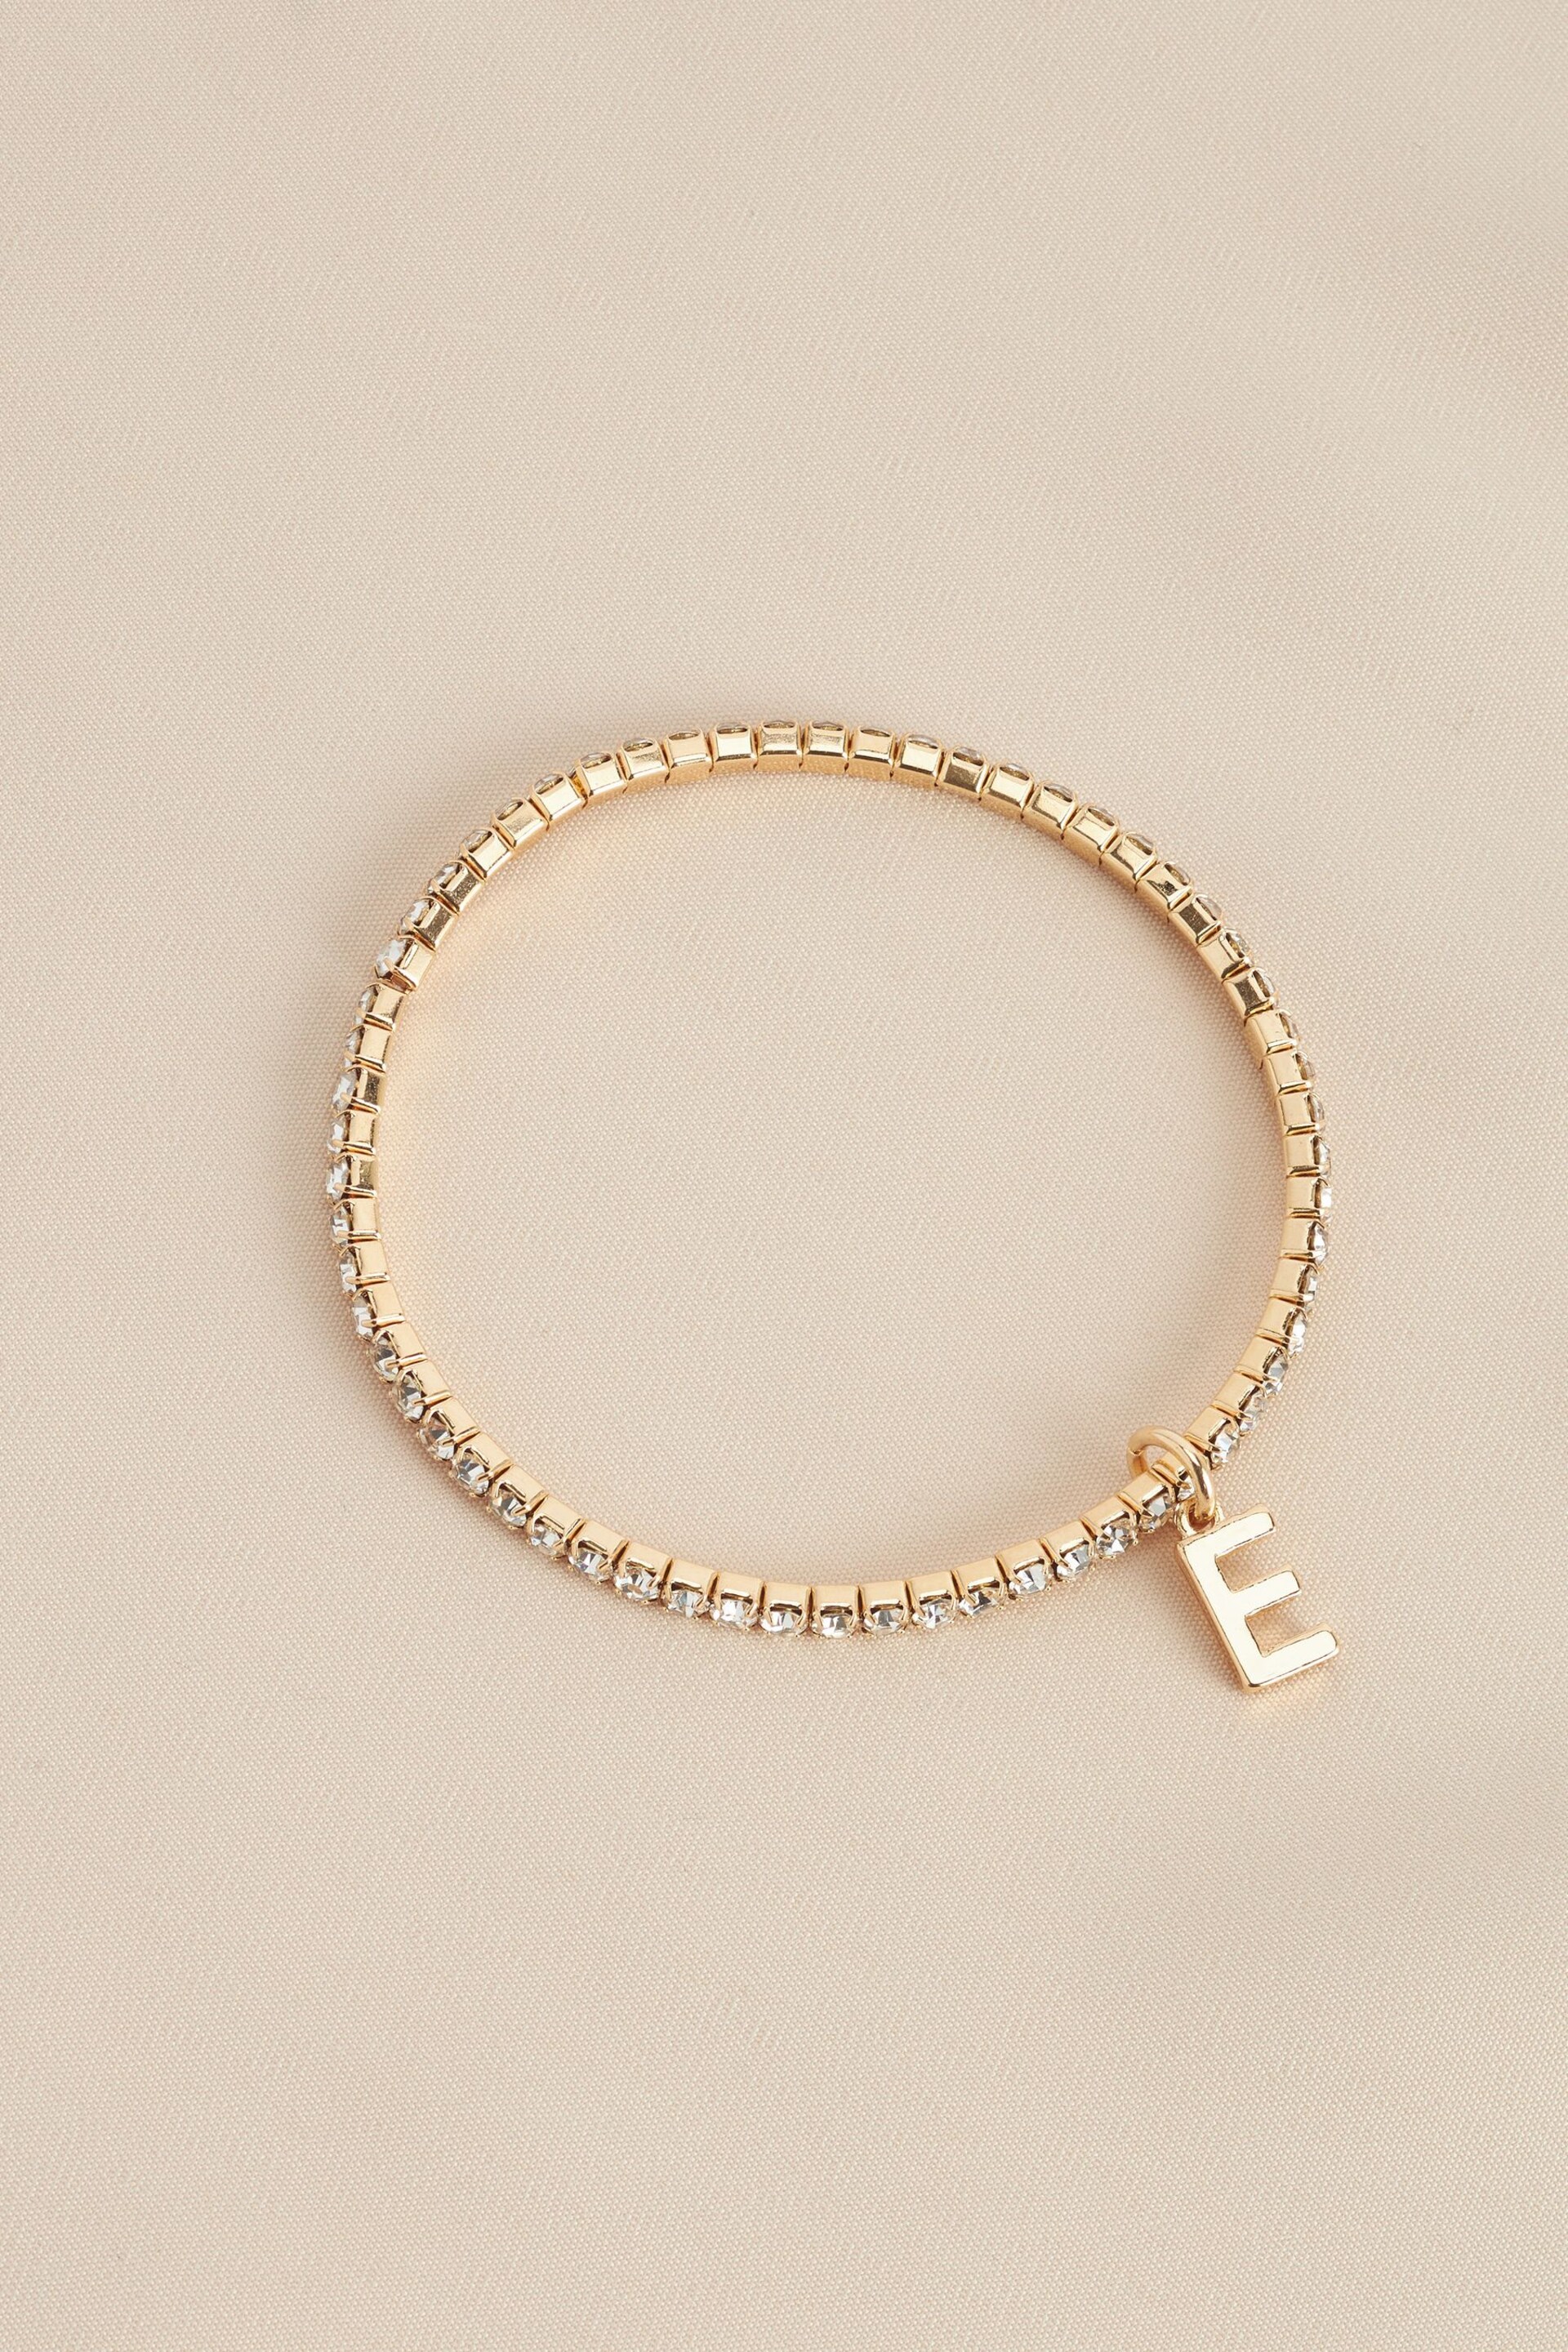 Gold Tone Initial Bracelet Letter E - Image 1 of 3